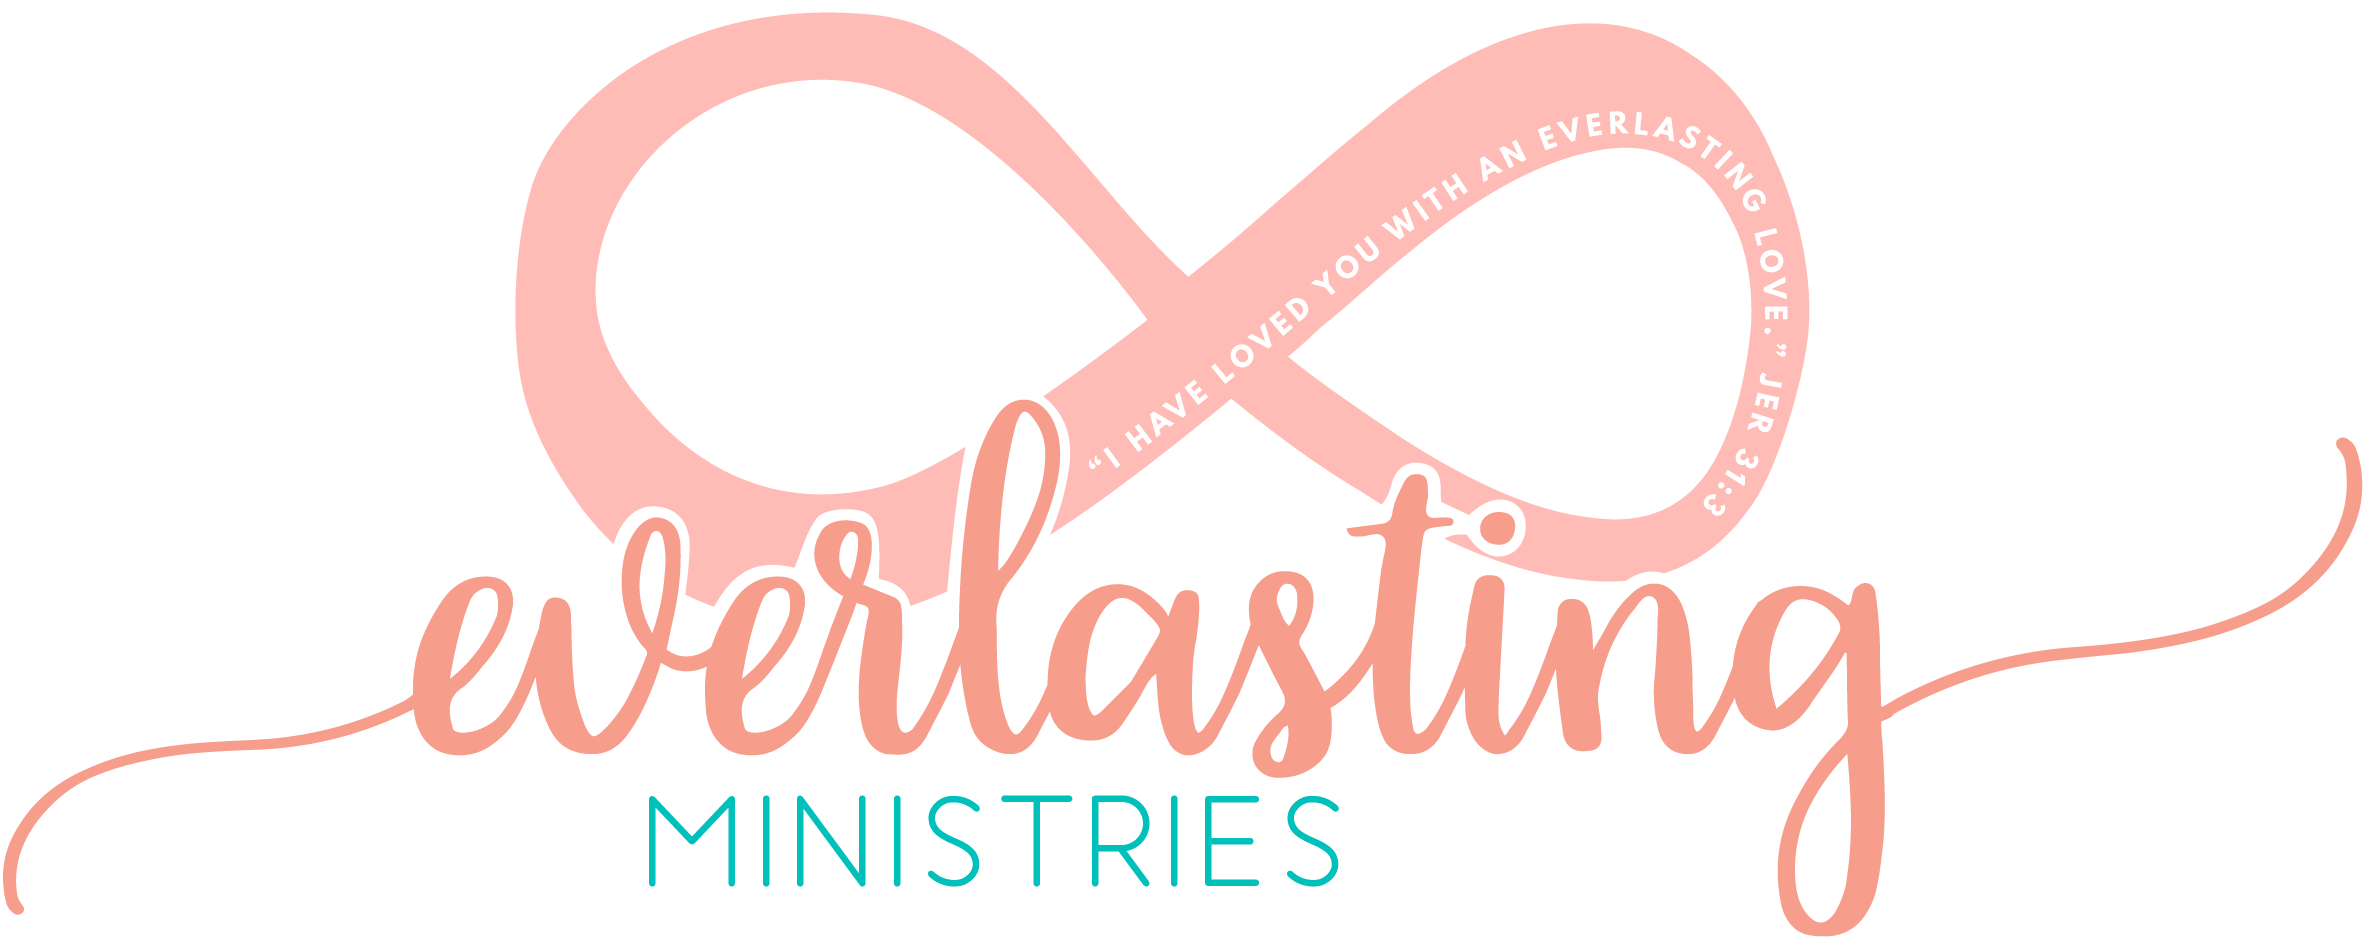 Everlasting Ministries